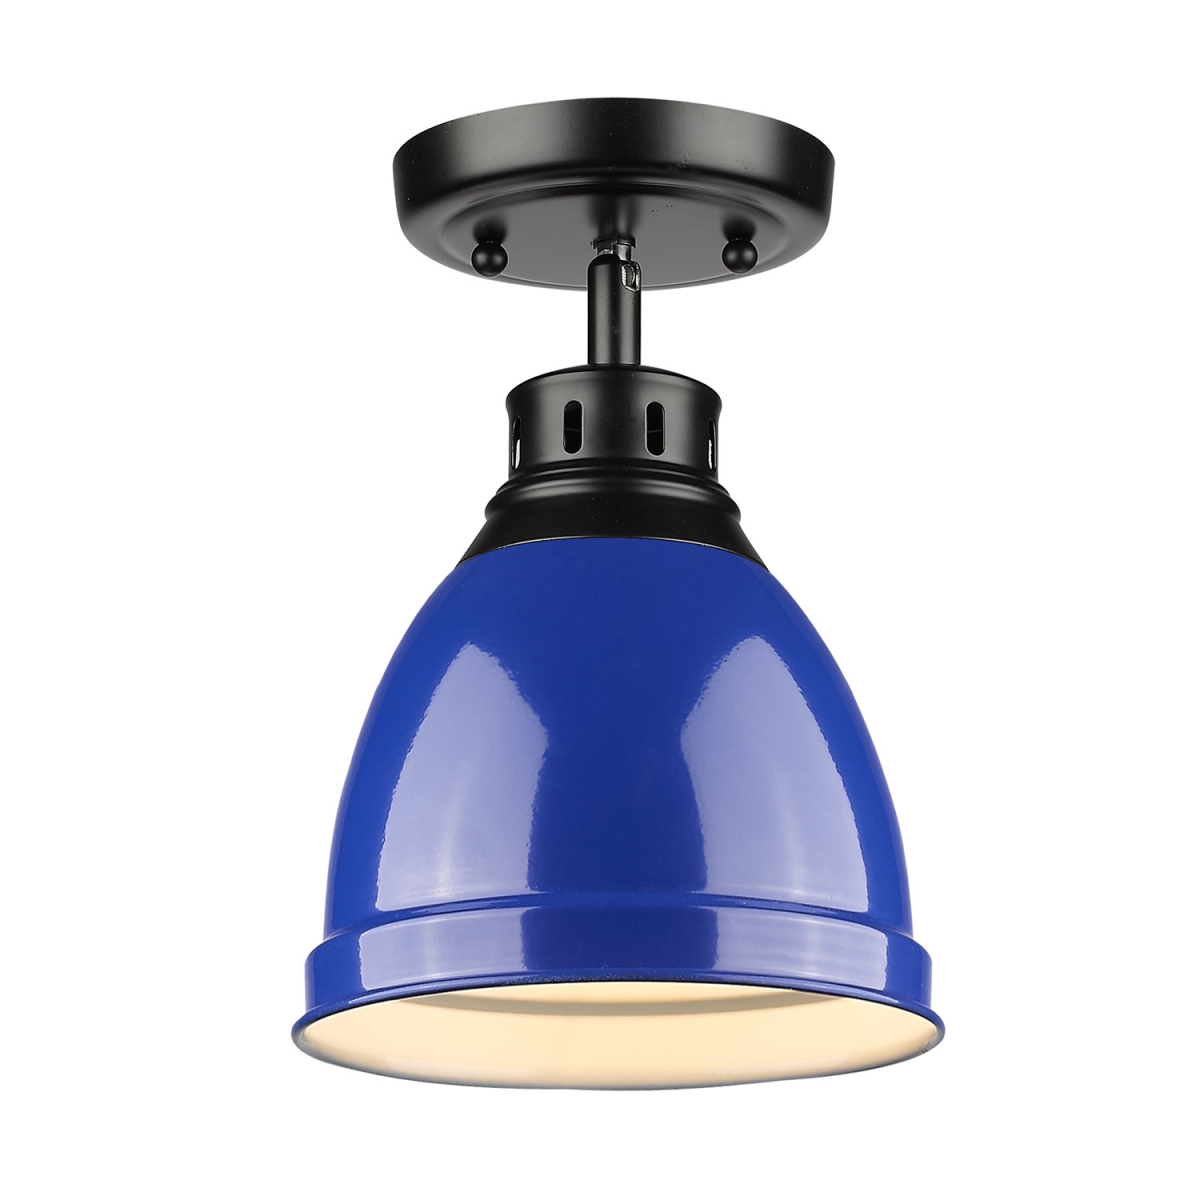 3602-fm Blk-be Duncan Flush Mount Light With Blue Shade, Black